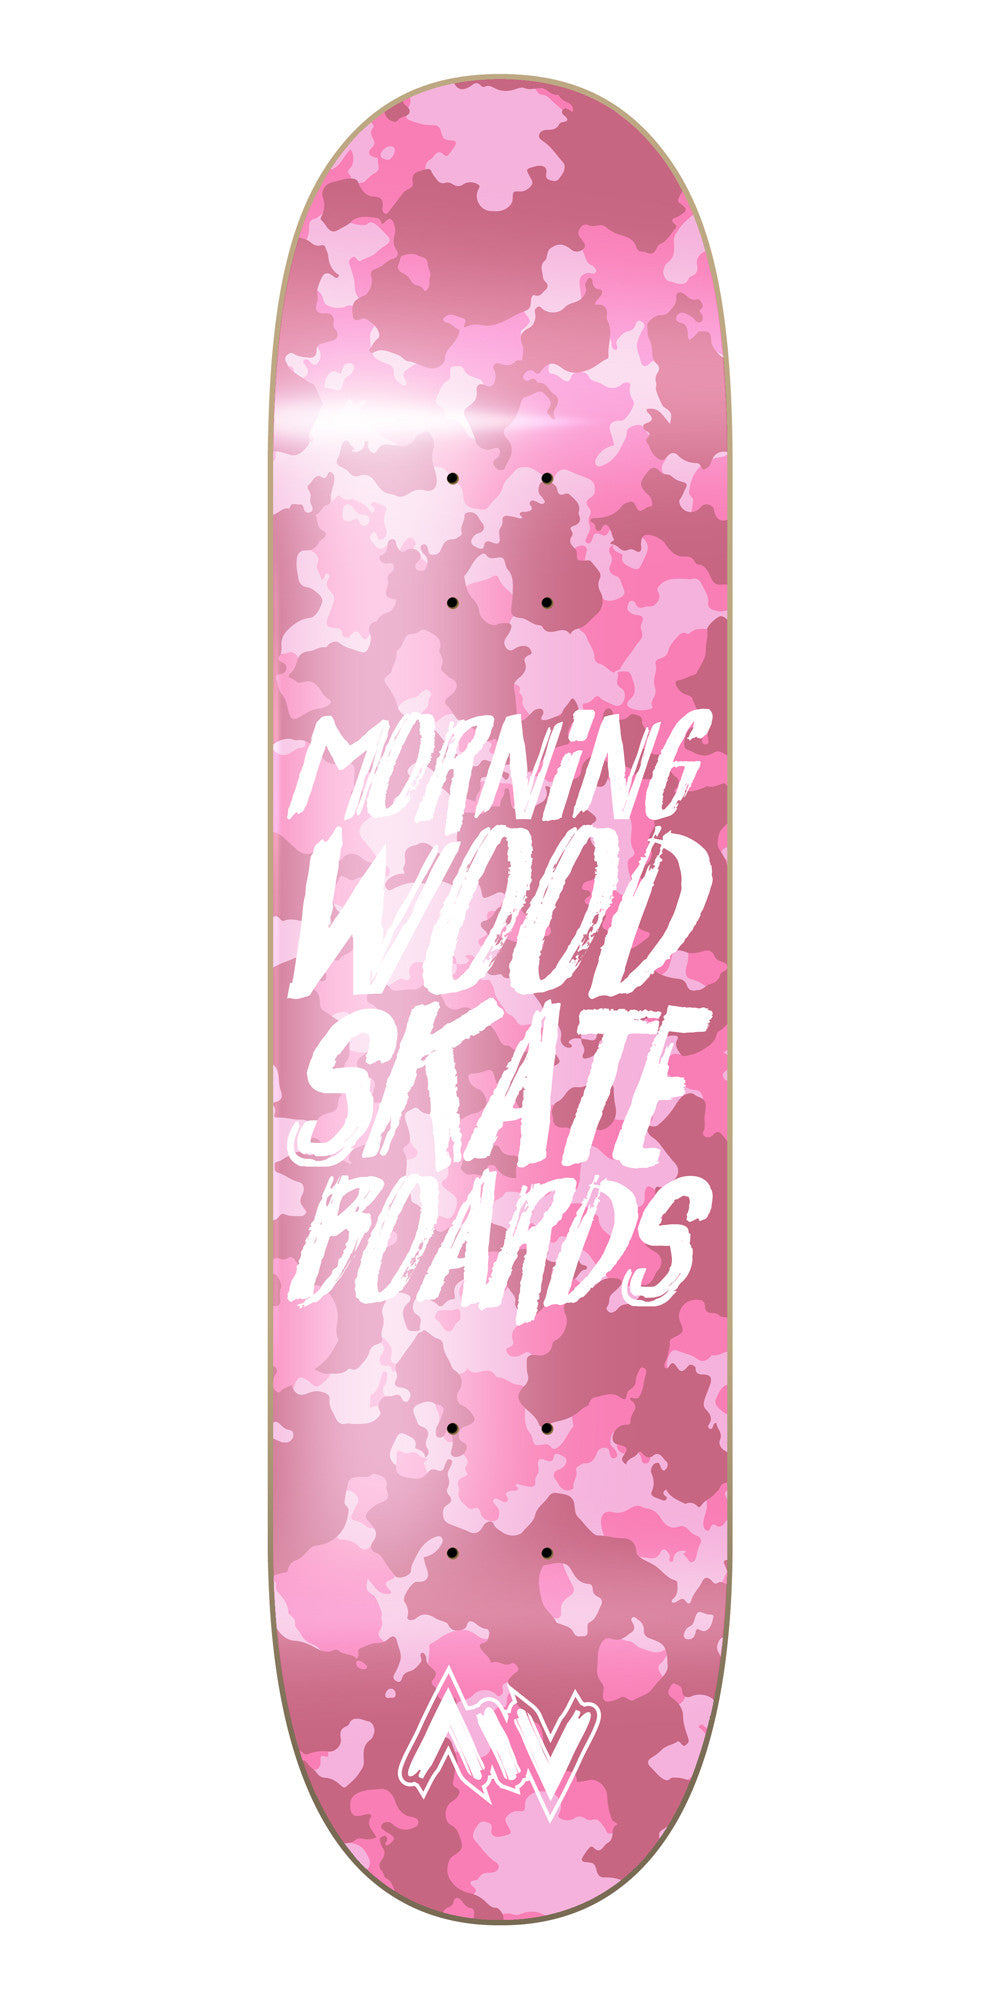 New York Pink Camo Skateboard Deck